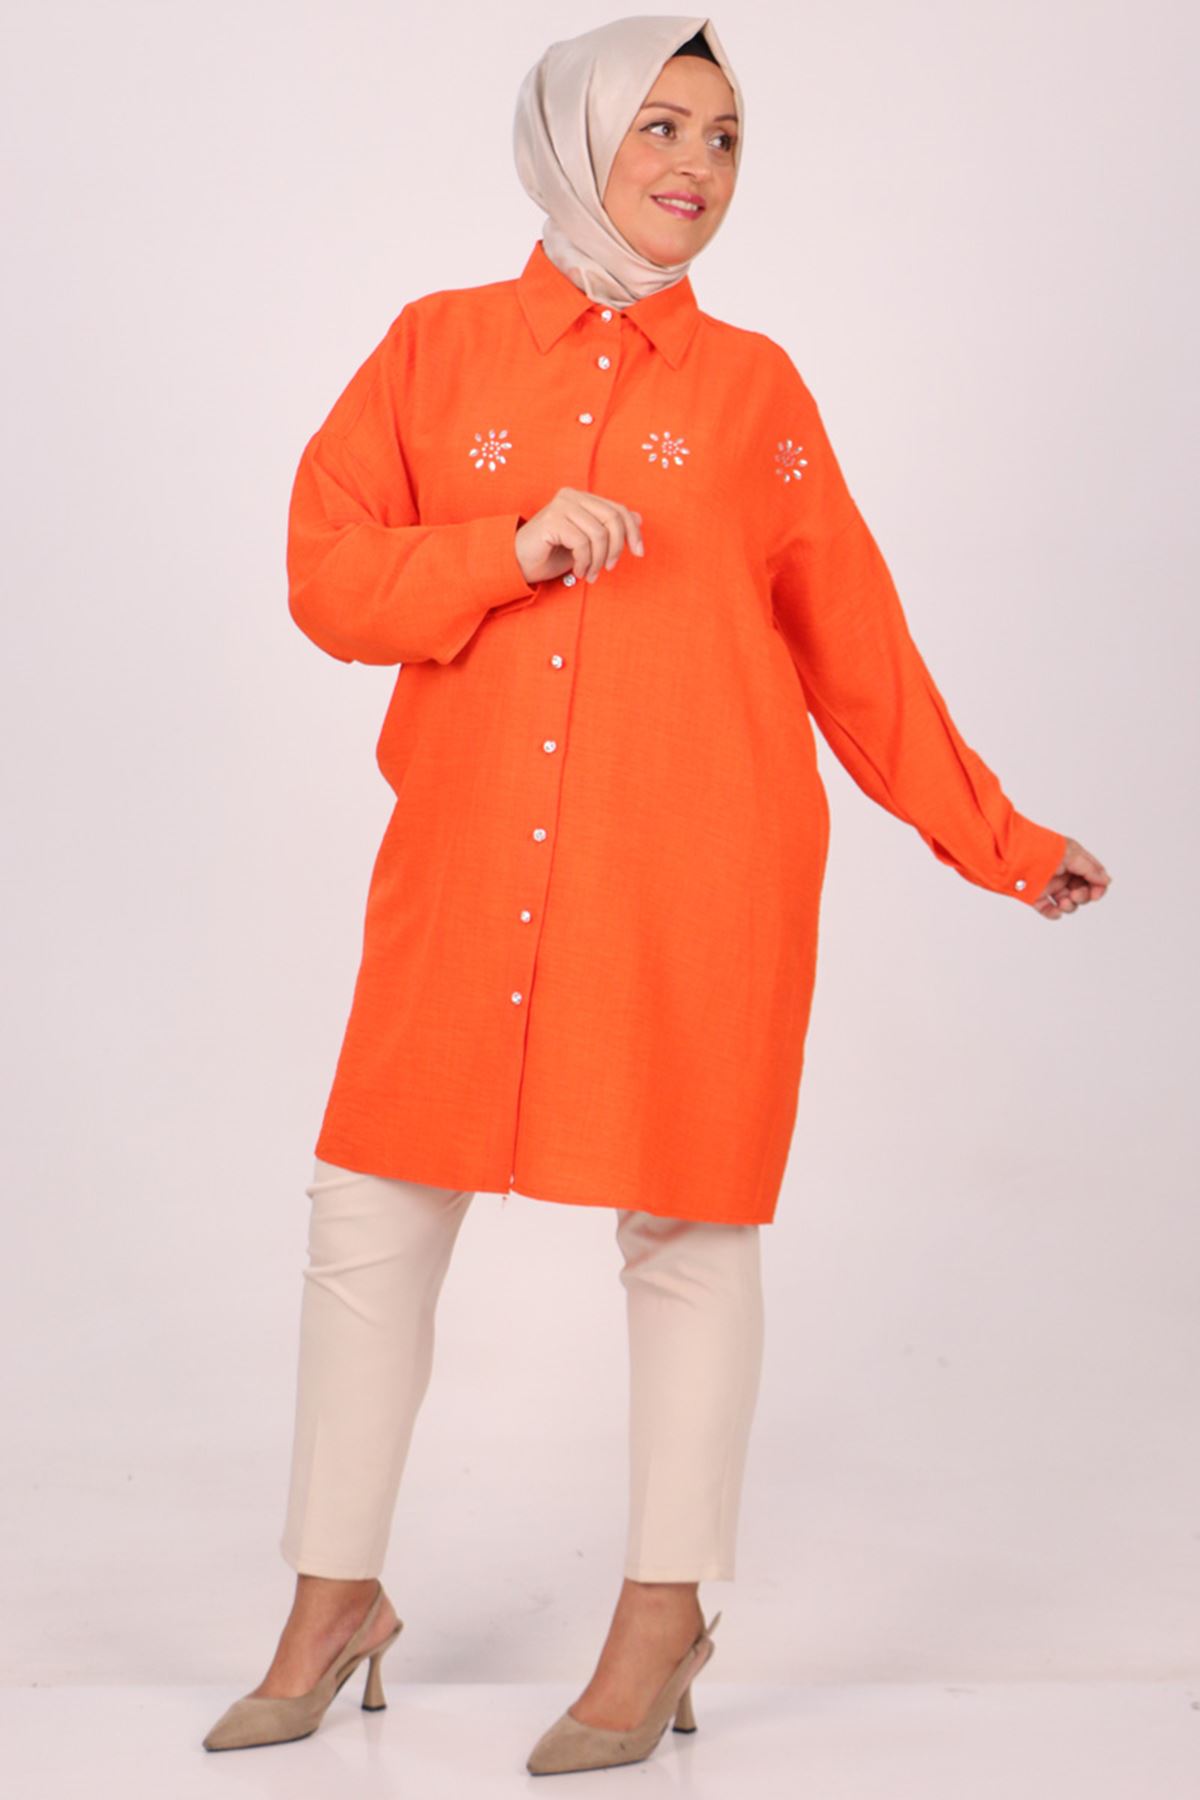 38077-1 Large Size Stone Printed Linen Airobin Shirt - Orange